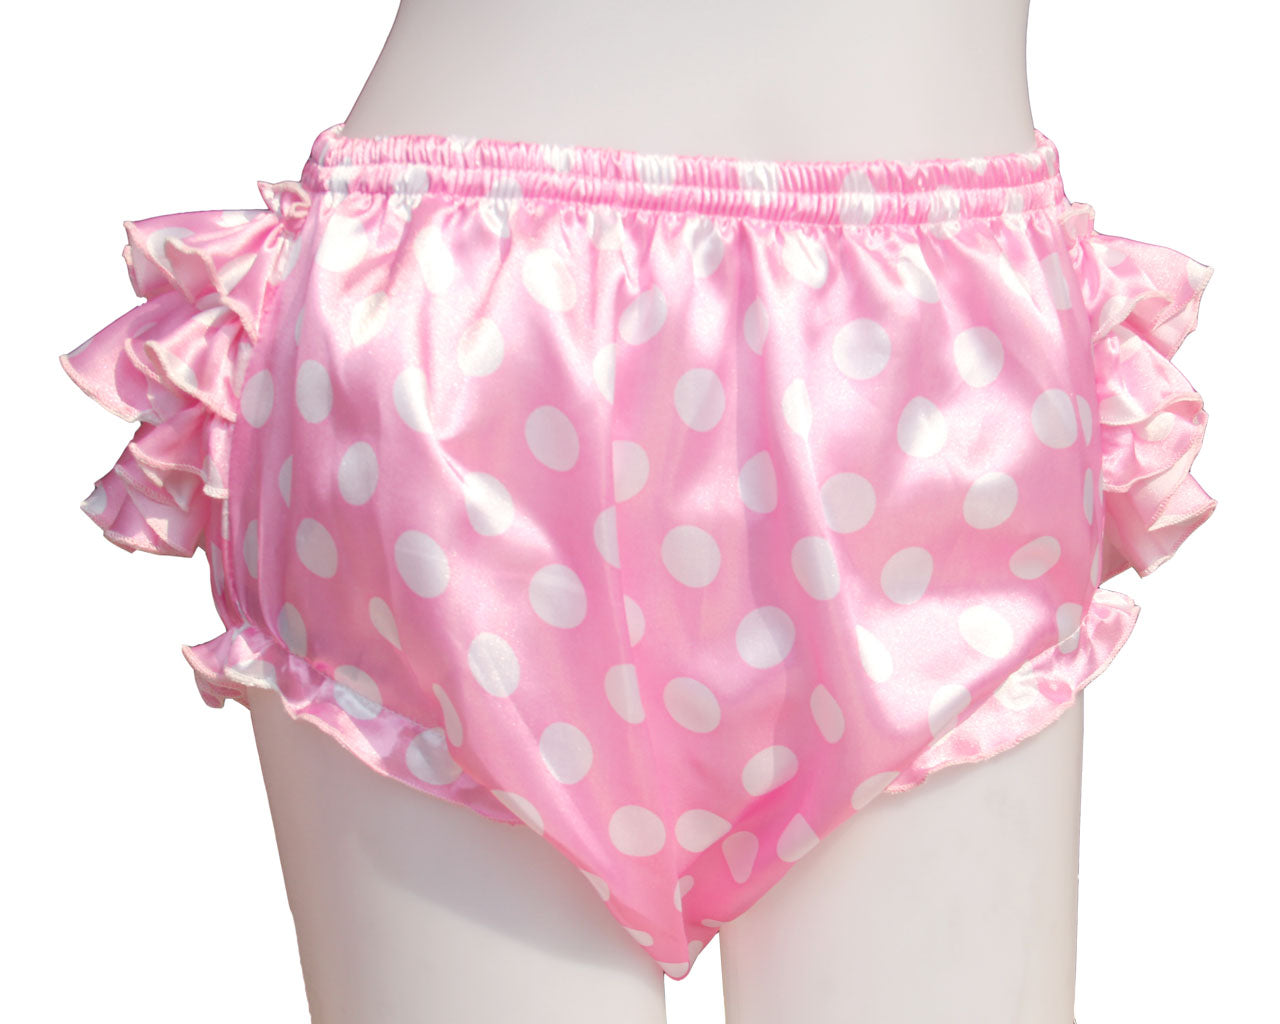 ABDL Ruffle Panties Diaper Cover Bloomers